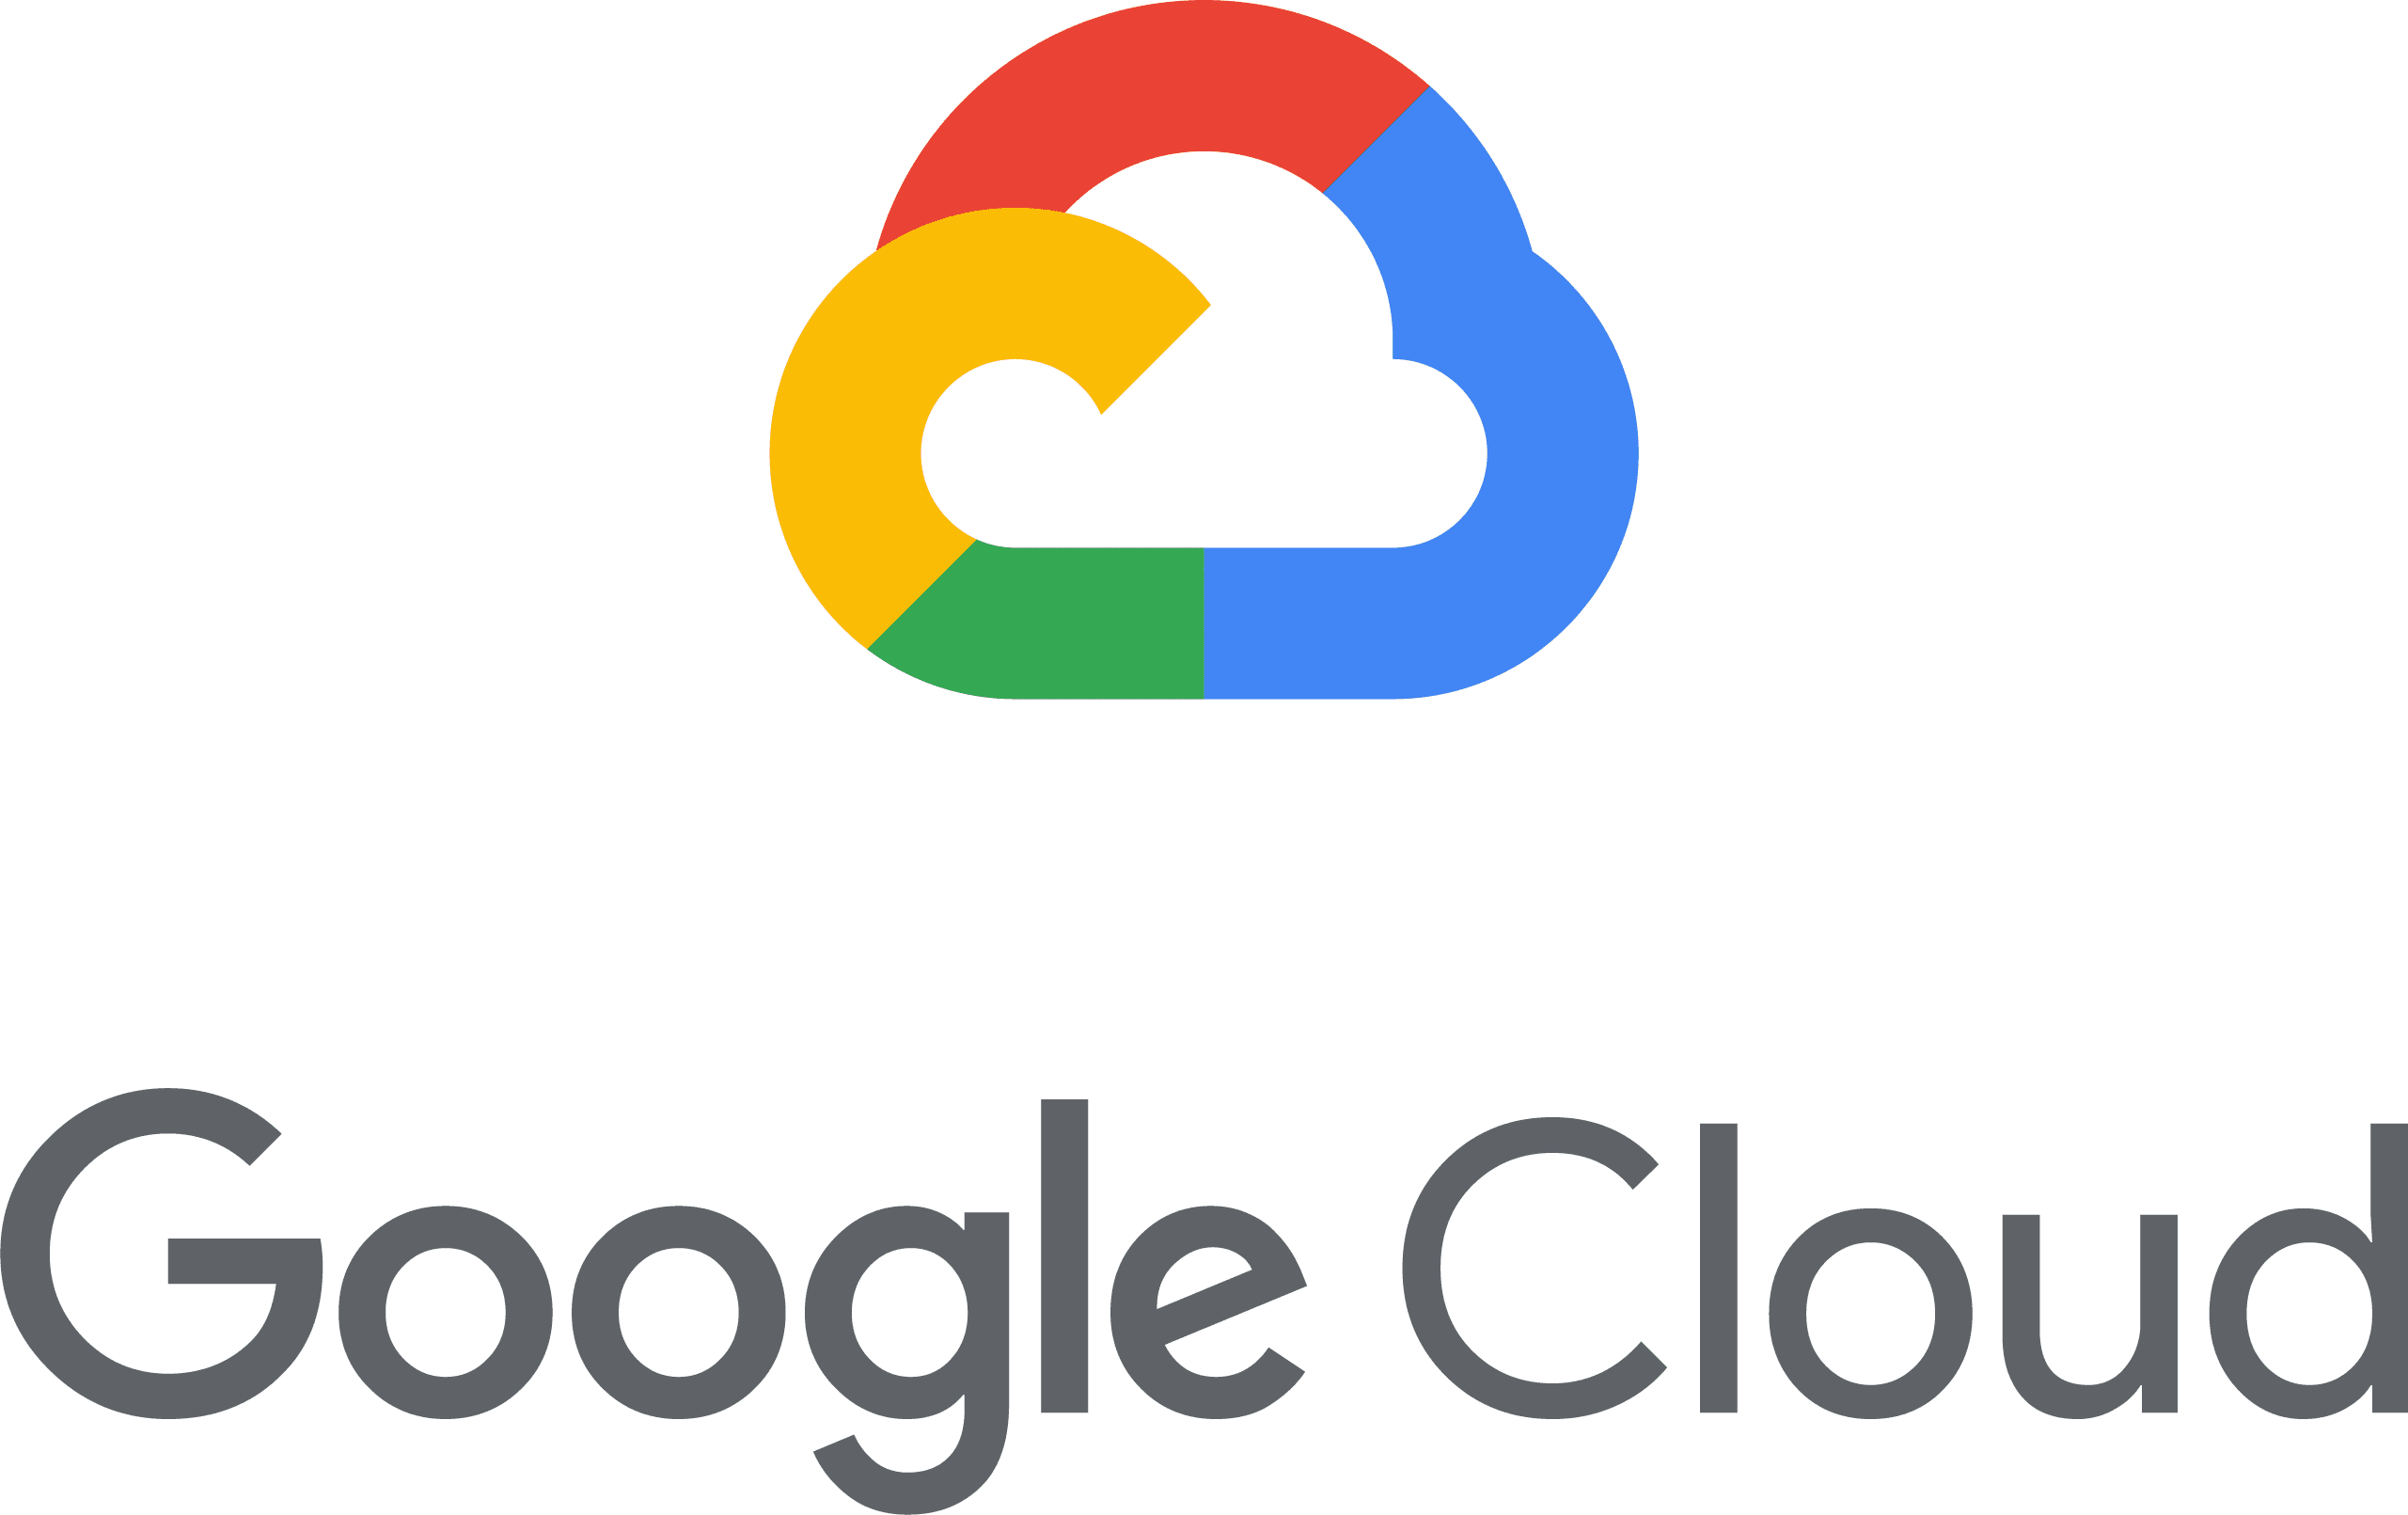 Google Cloud Platform Logo_Zixi Partner